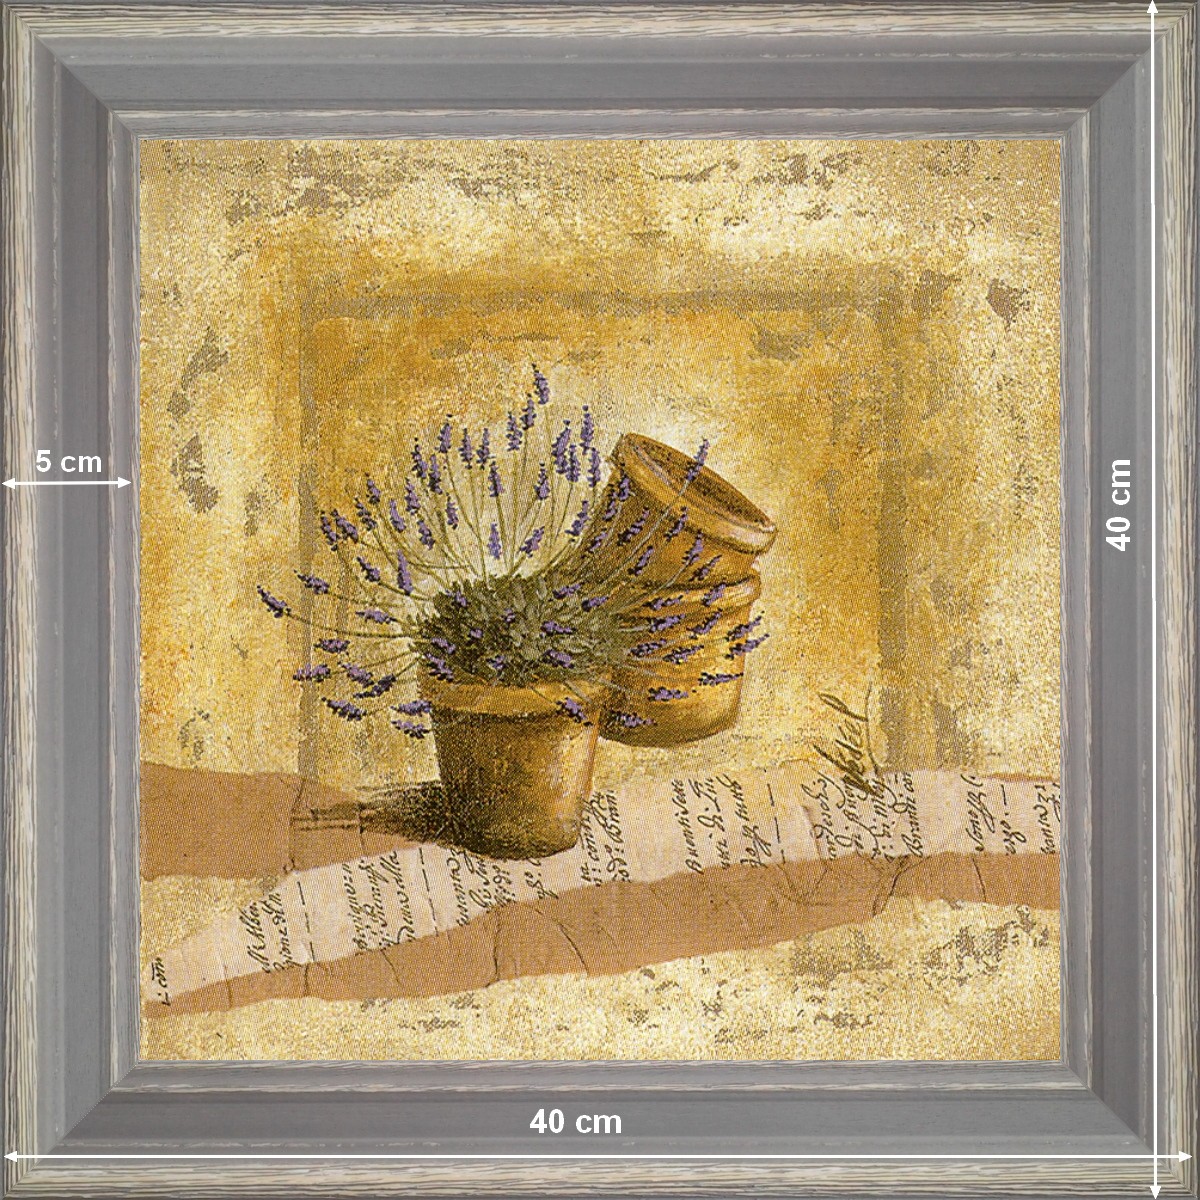 Pots and Lavender - dimension 40 x 40 cm - Grey